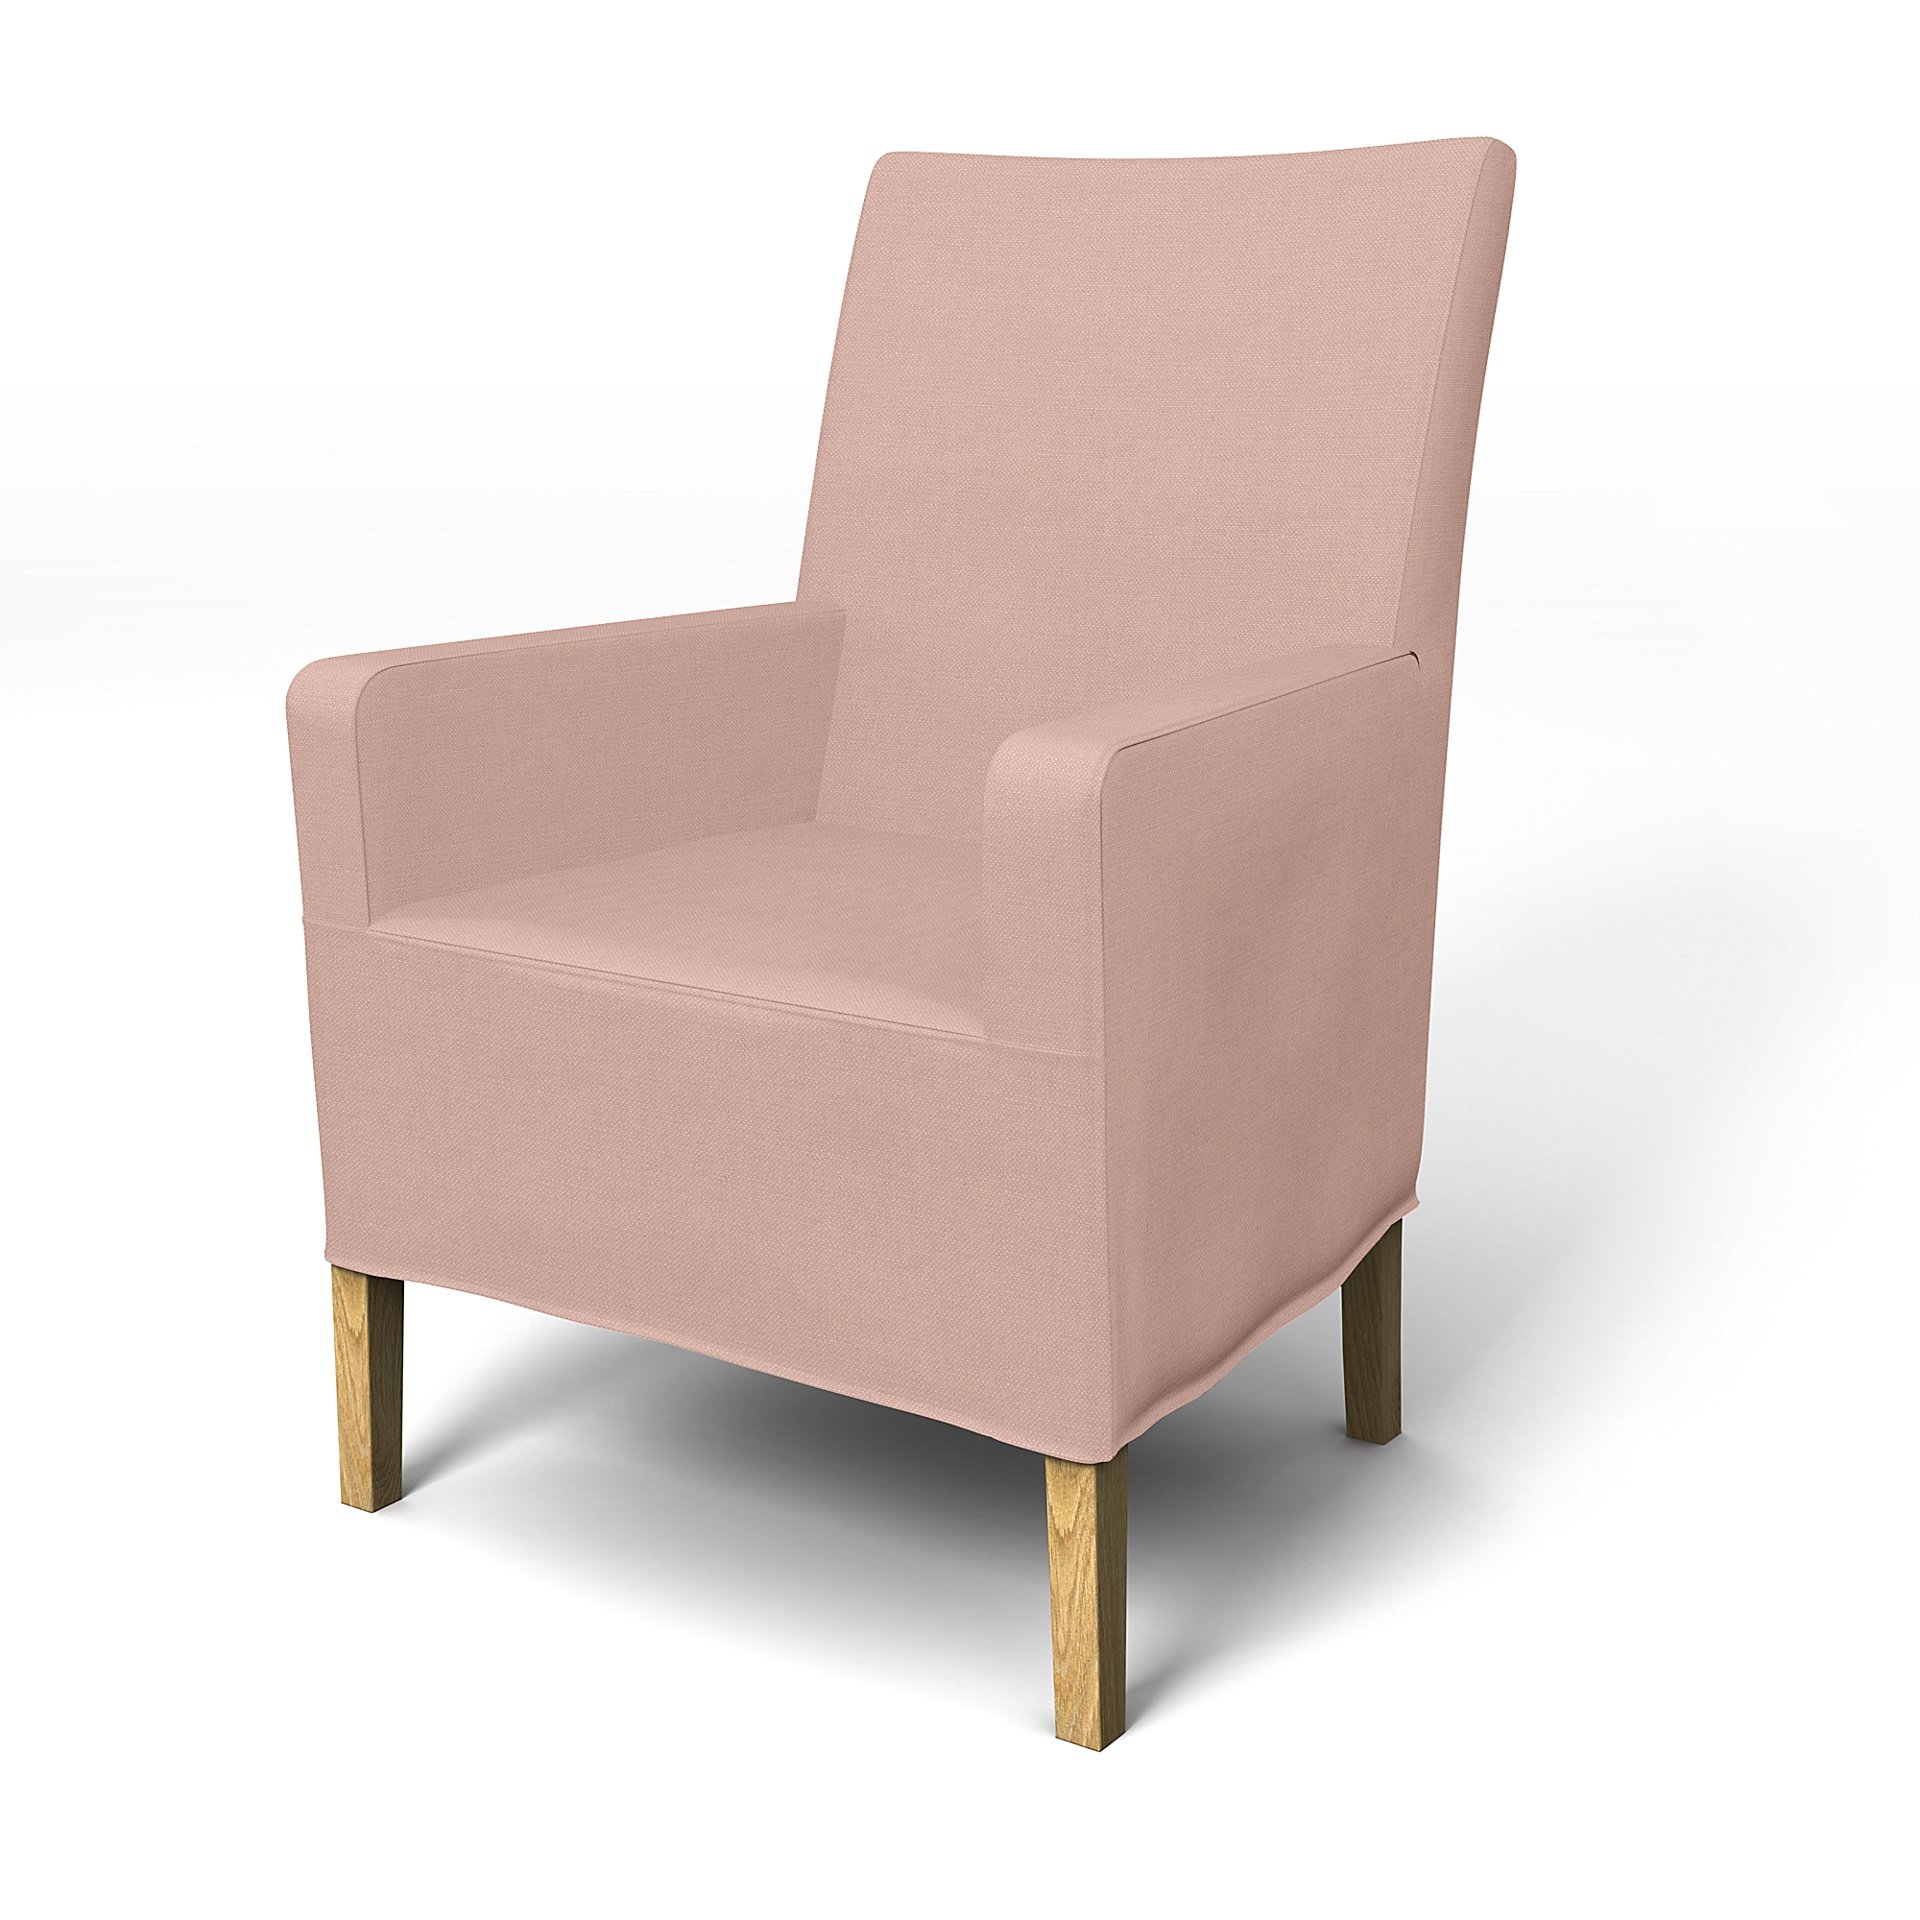 IKEA - Henriksdal, Chair cover w/ armrest, medium length skirt, Blush, Linen - Bemz